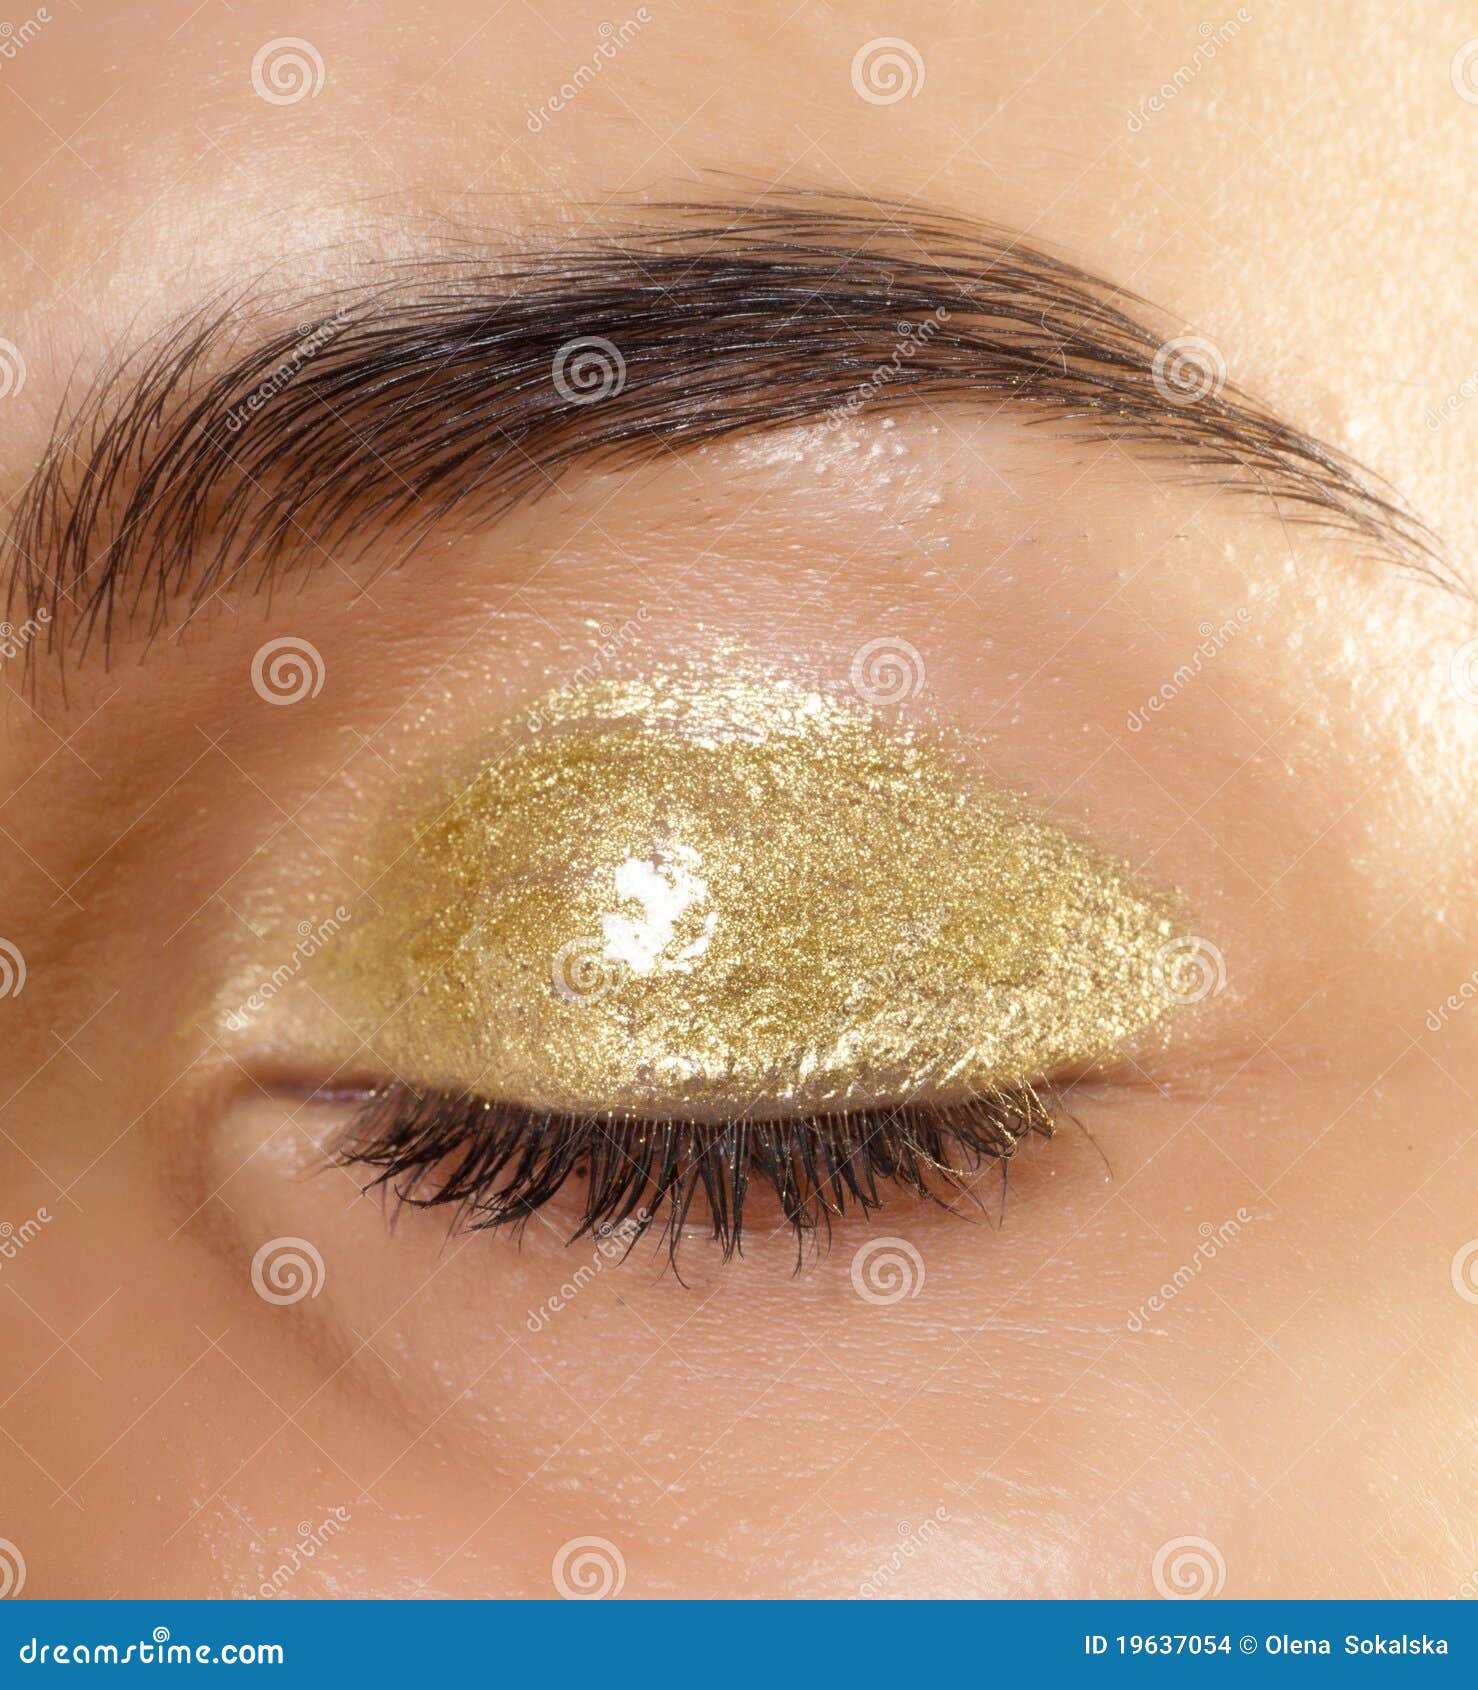 eye with glamor make-up